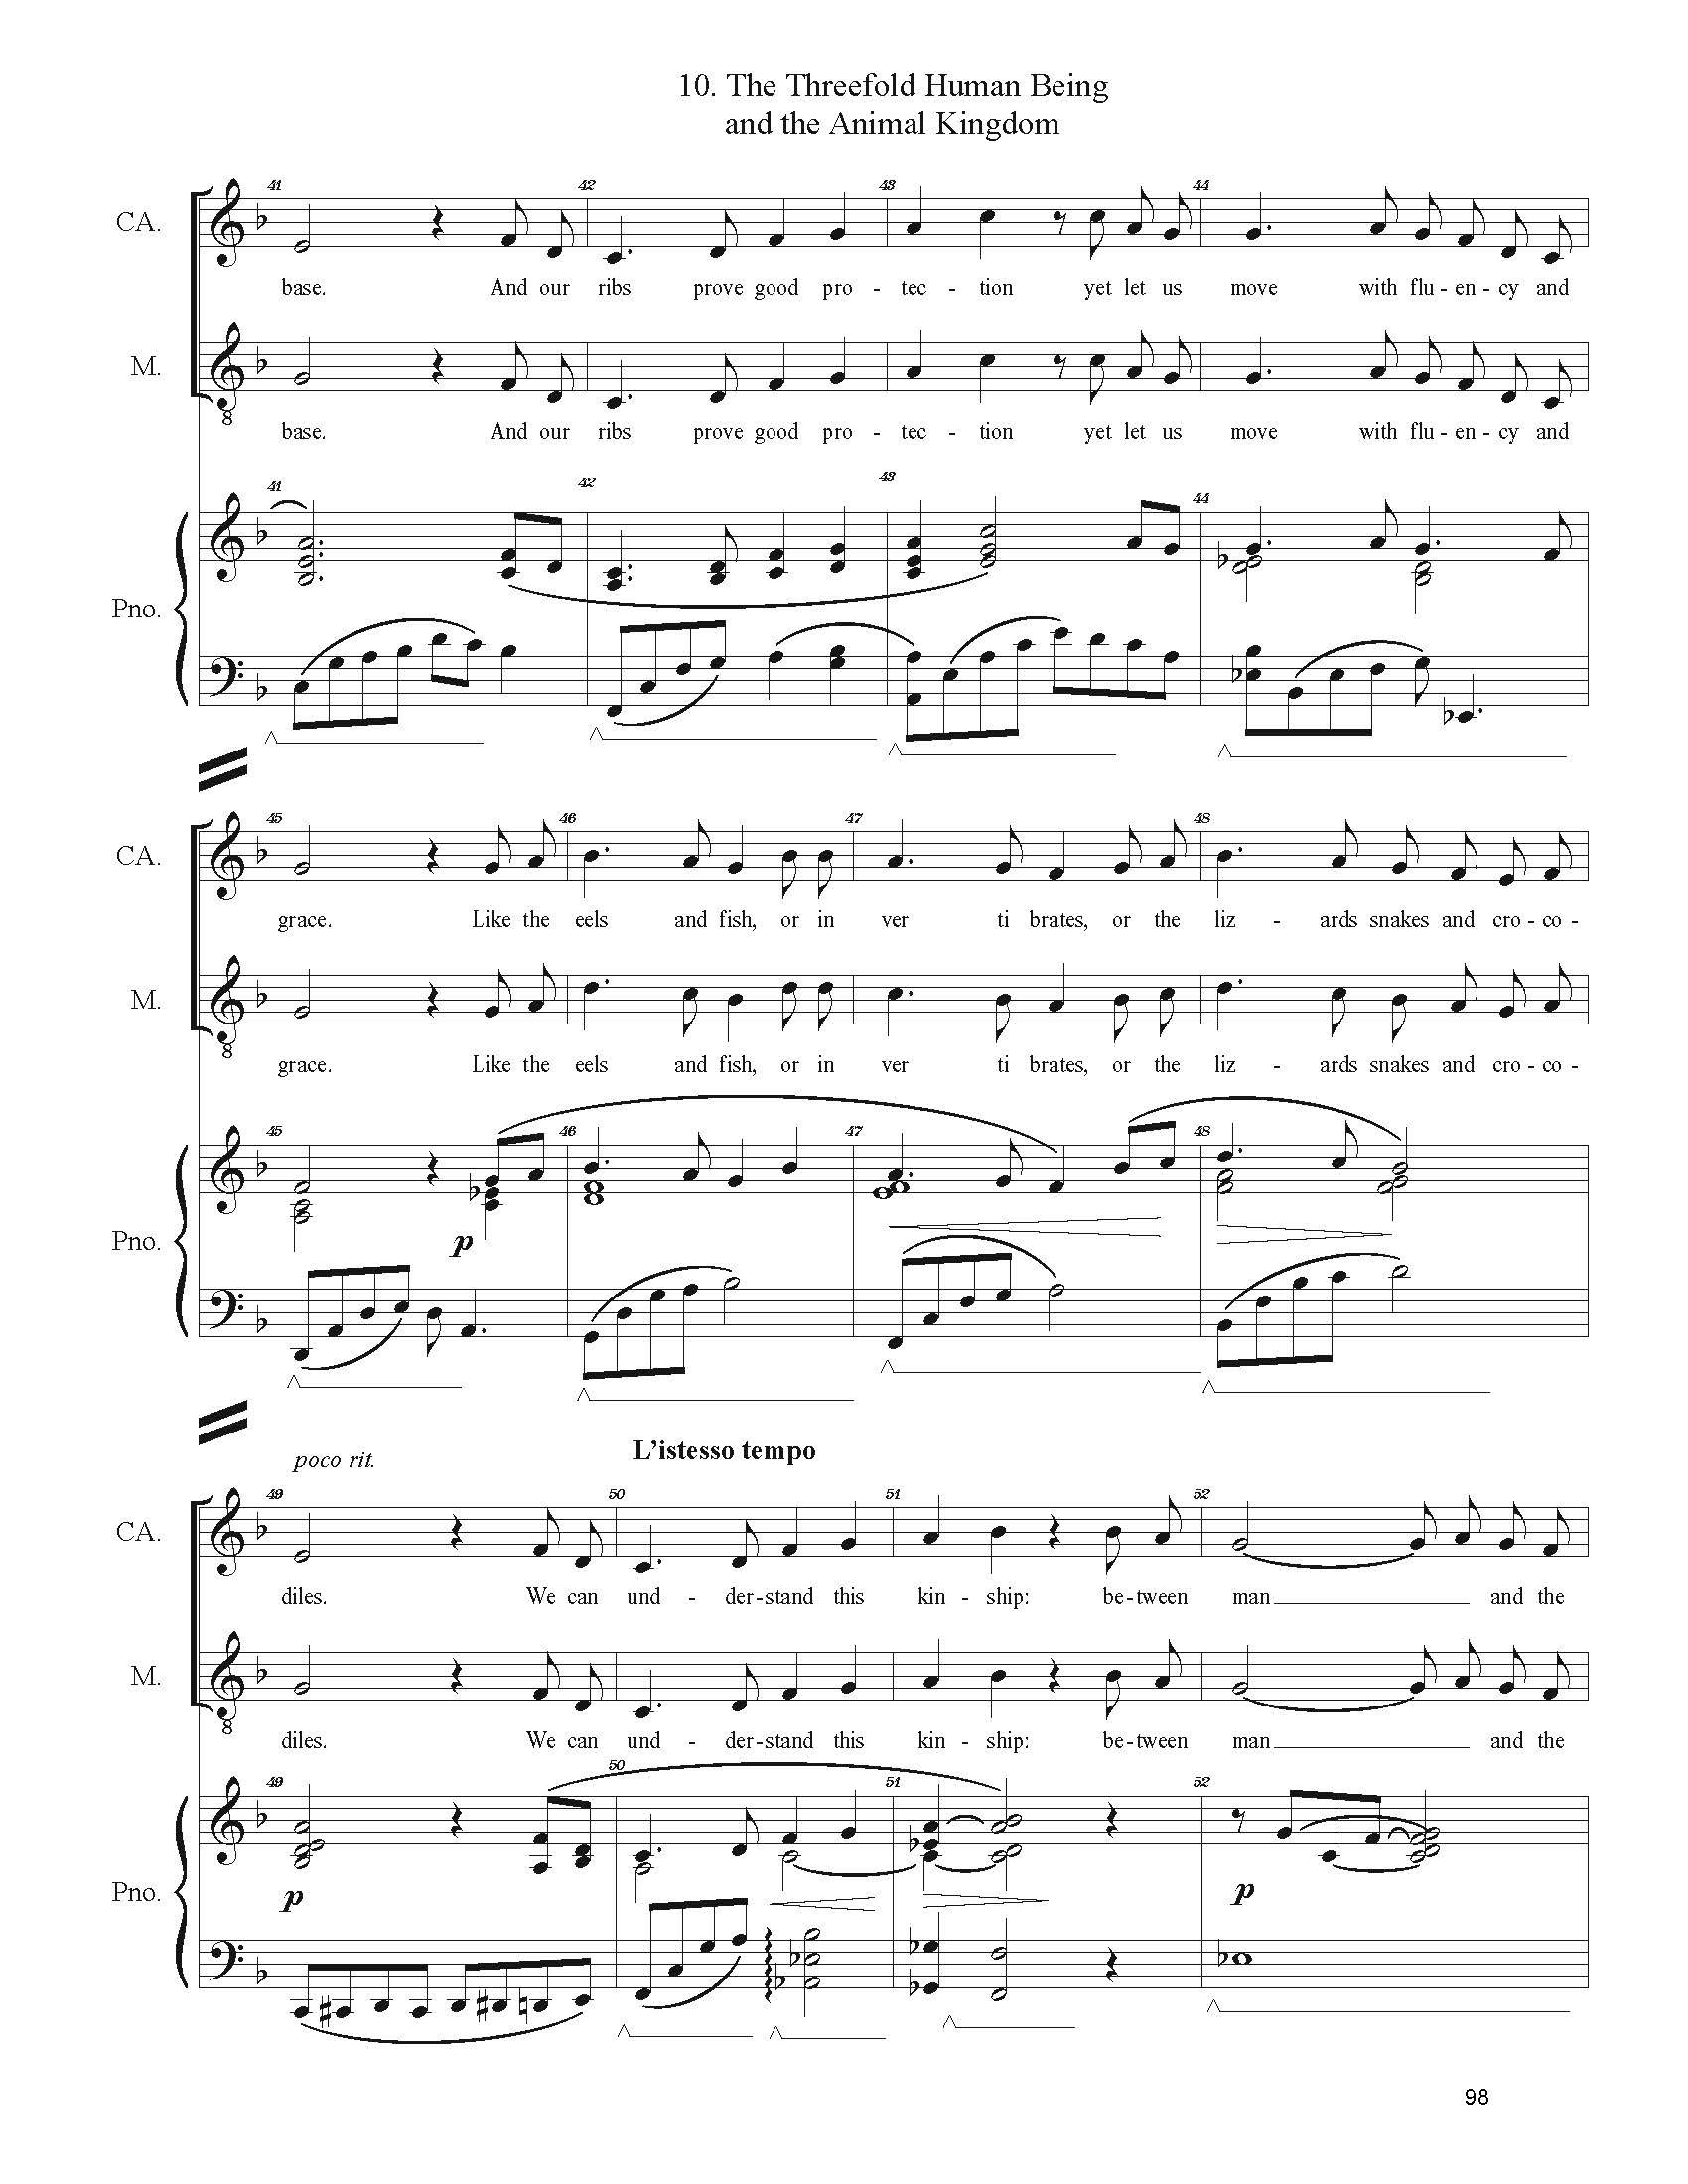 FULL PIANO VOCAL SCORE DRAFT 1 - Score_Page_098.jpg